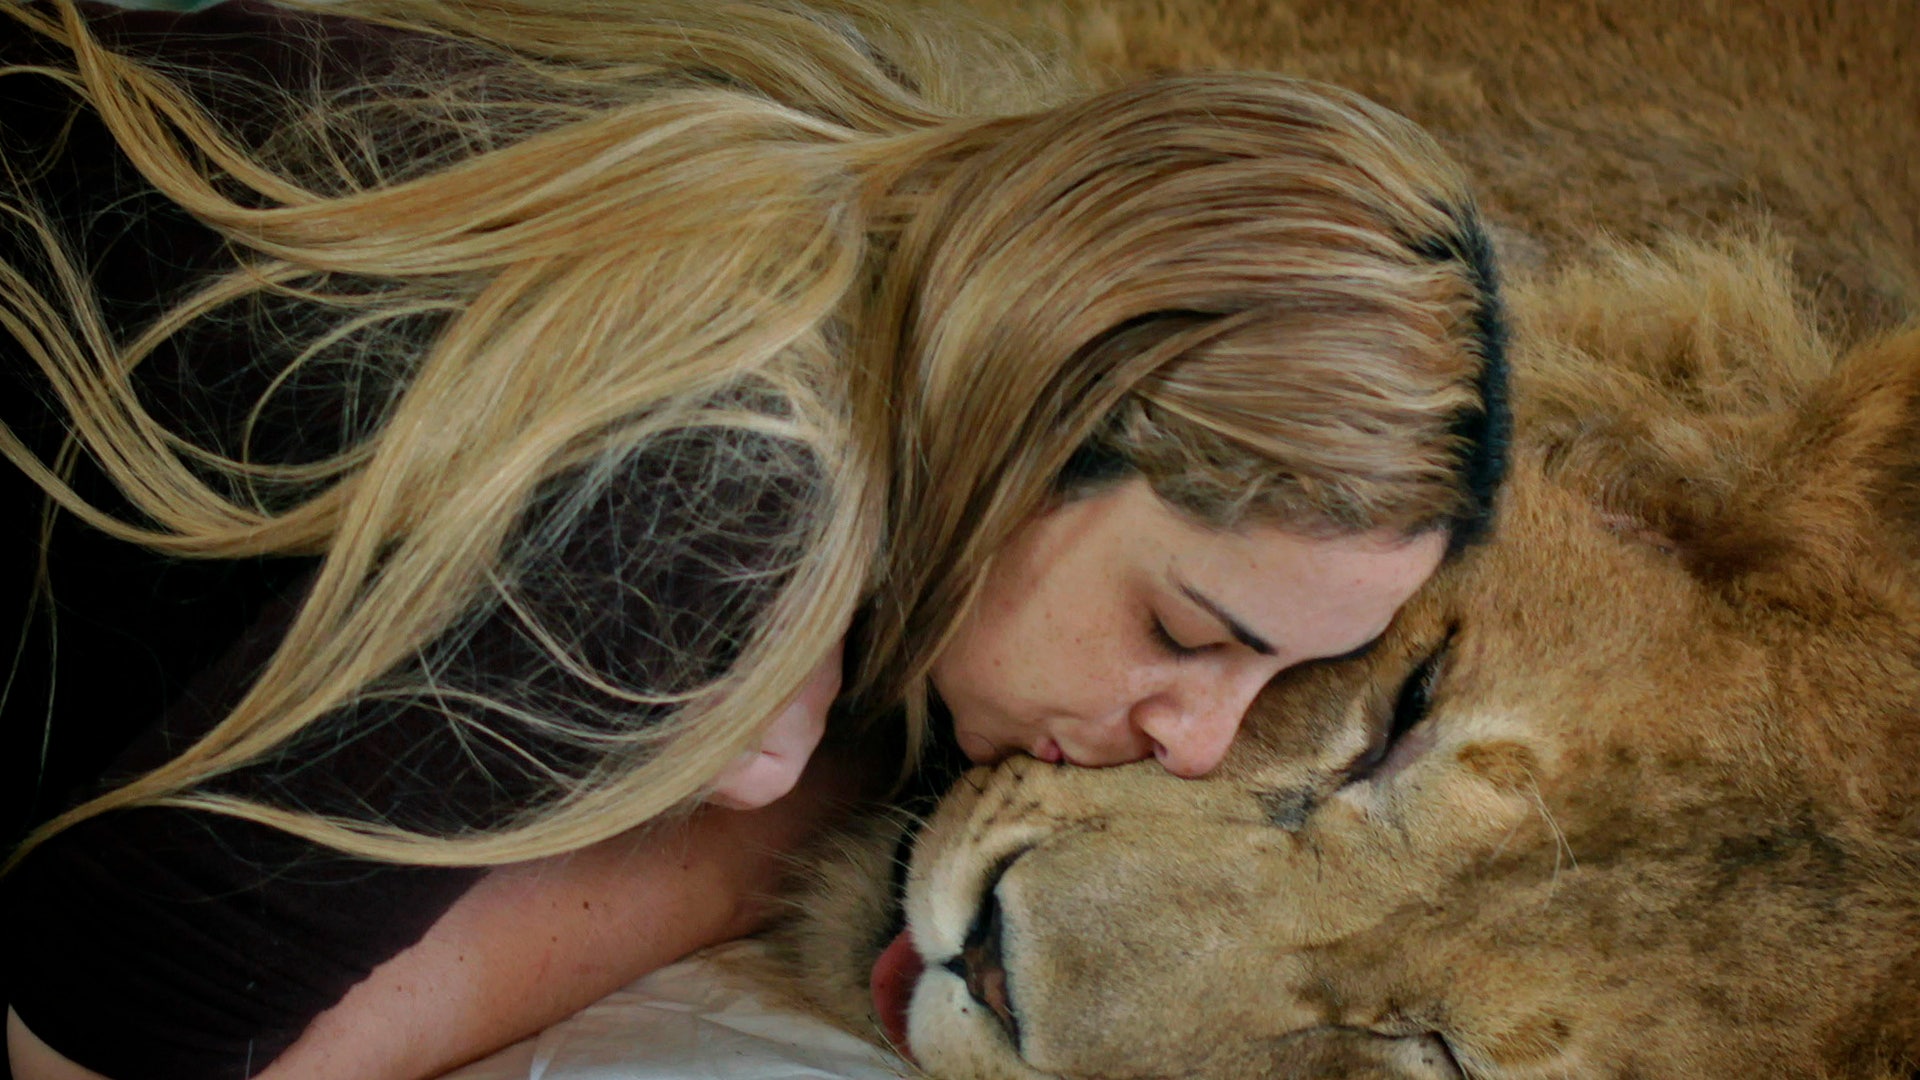 Мужчин лев женщина форум. Девушка целует Льва. Лев обнимает женщину. Девушка и Лев обнимаются. Девочка обнимает Льва.